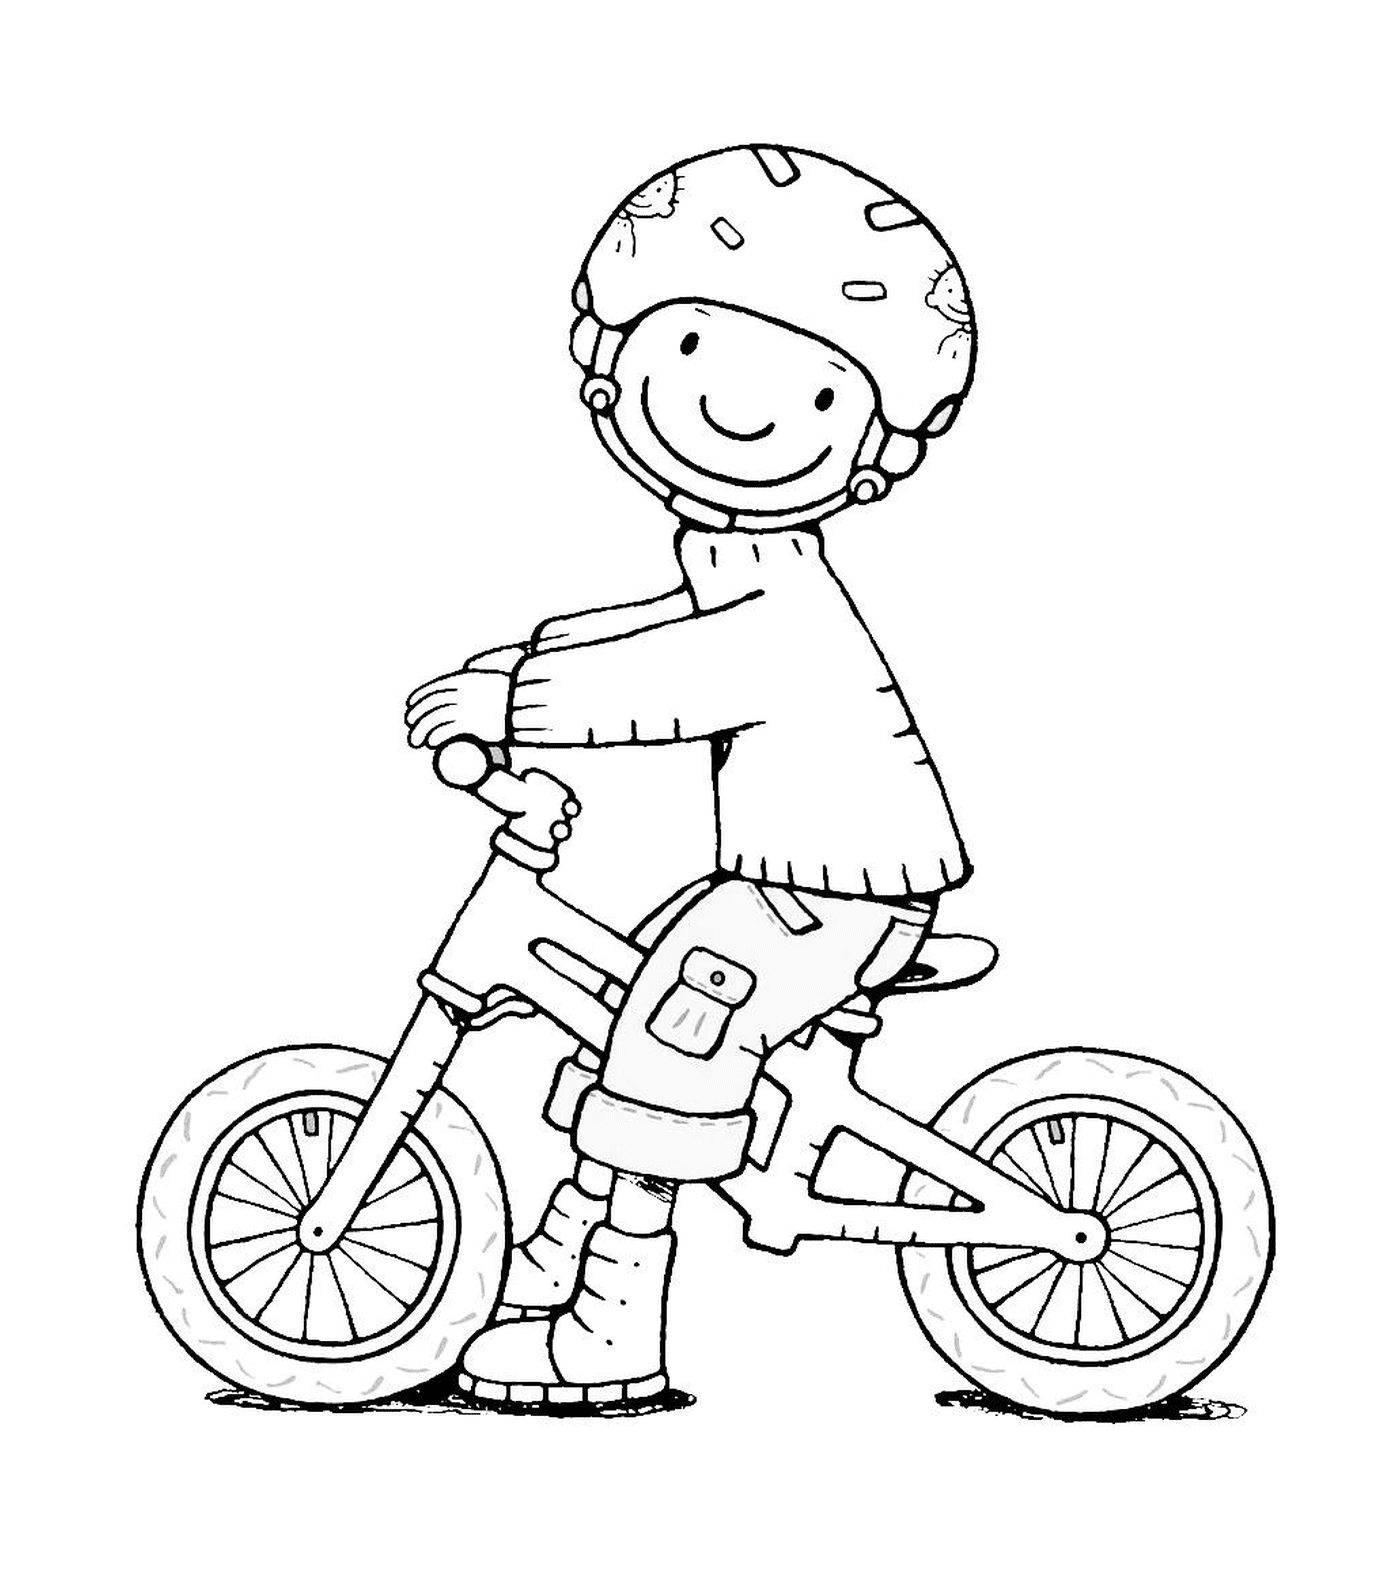  Sport, bicycle, boy by bike 